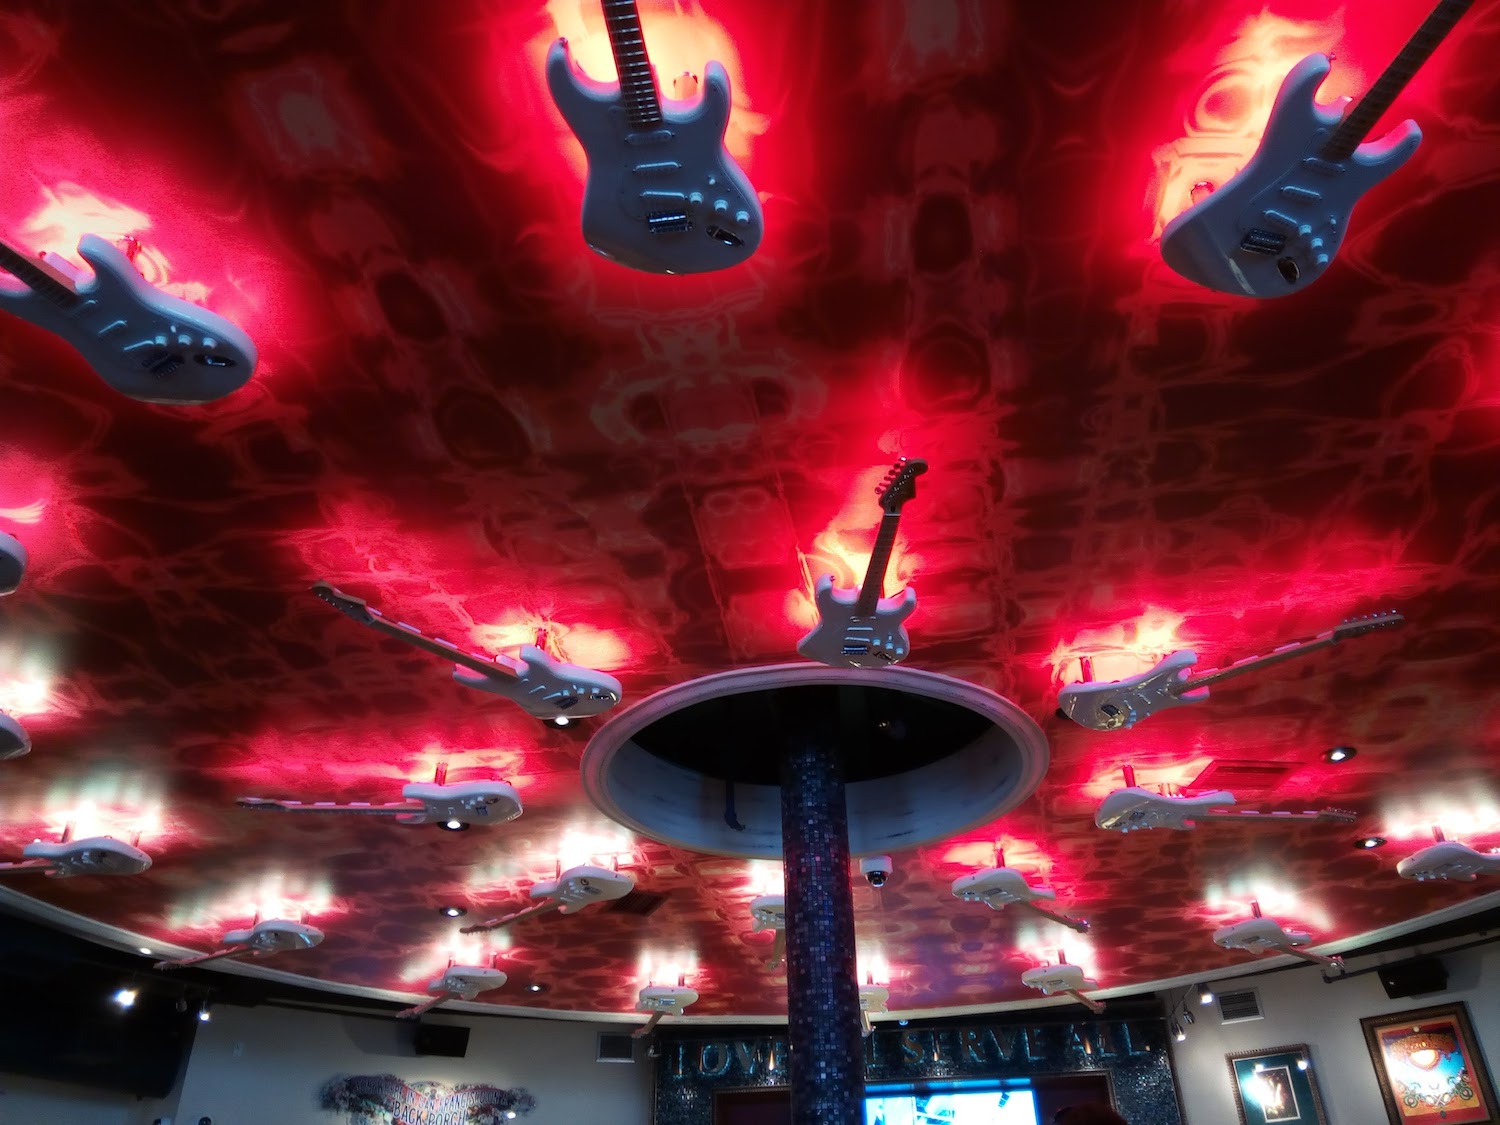 San Francisco Bay Area - Hard Rock Cafe ceiling